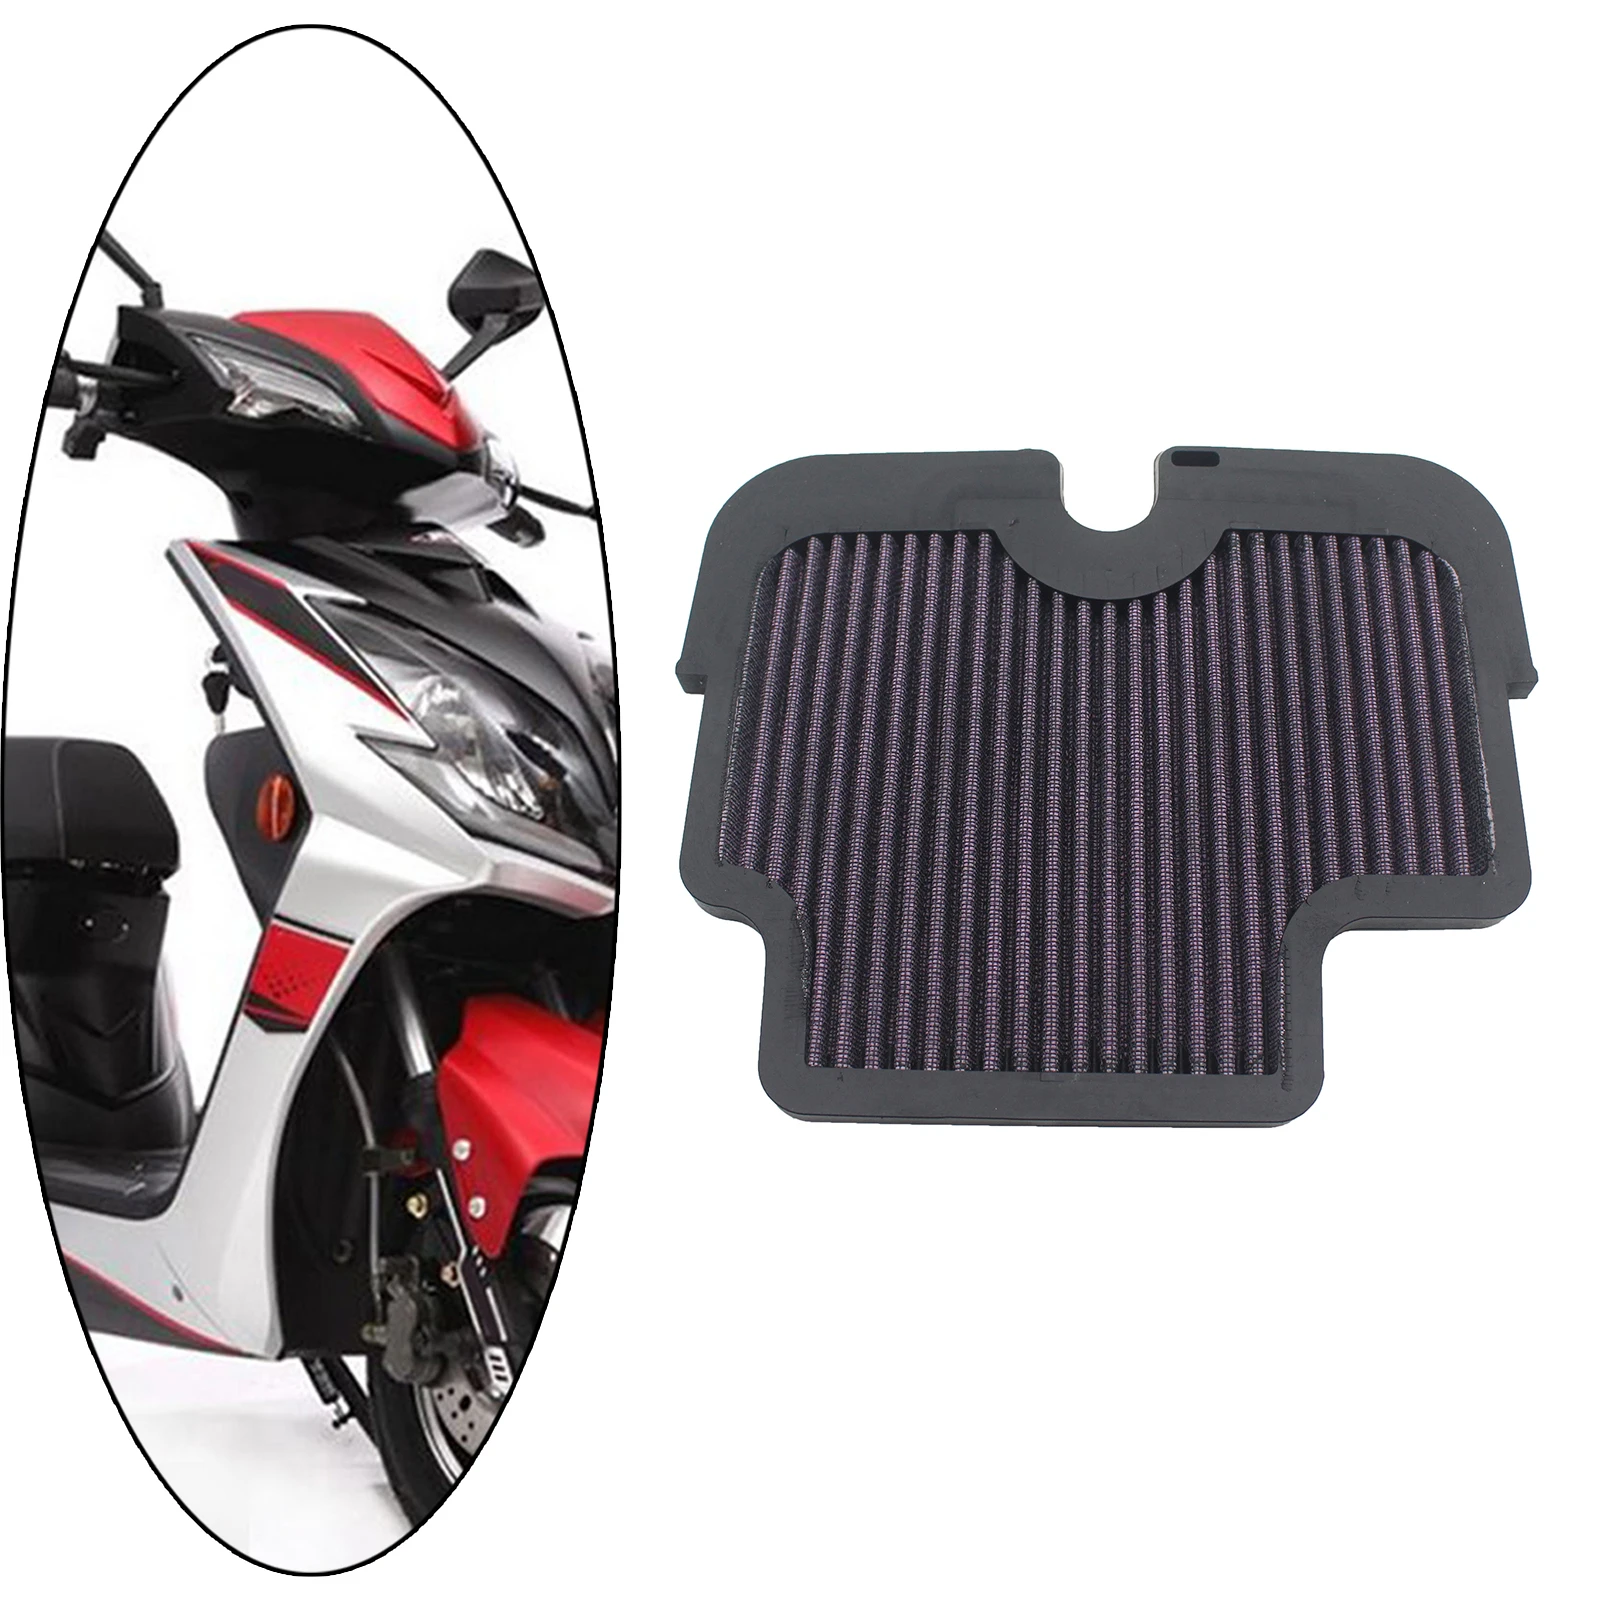 Motorcycle Air Intake Filter Cleaner, Fit for Kawasaki ER650 ER-6N 2009-2011 Motorbike Replace Accessories